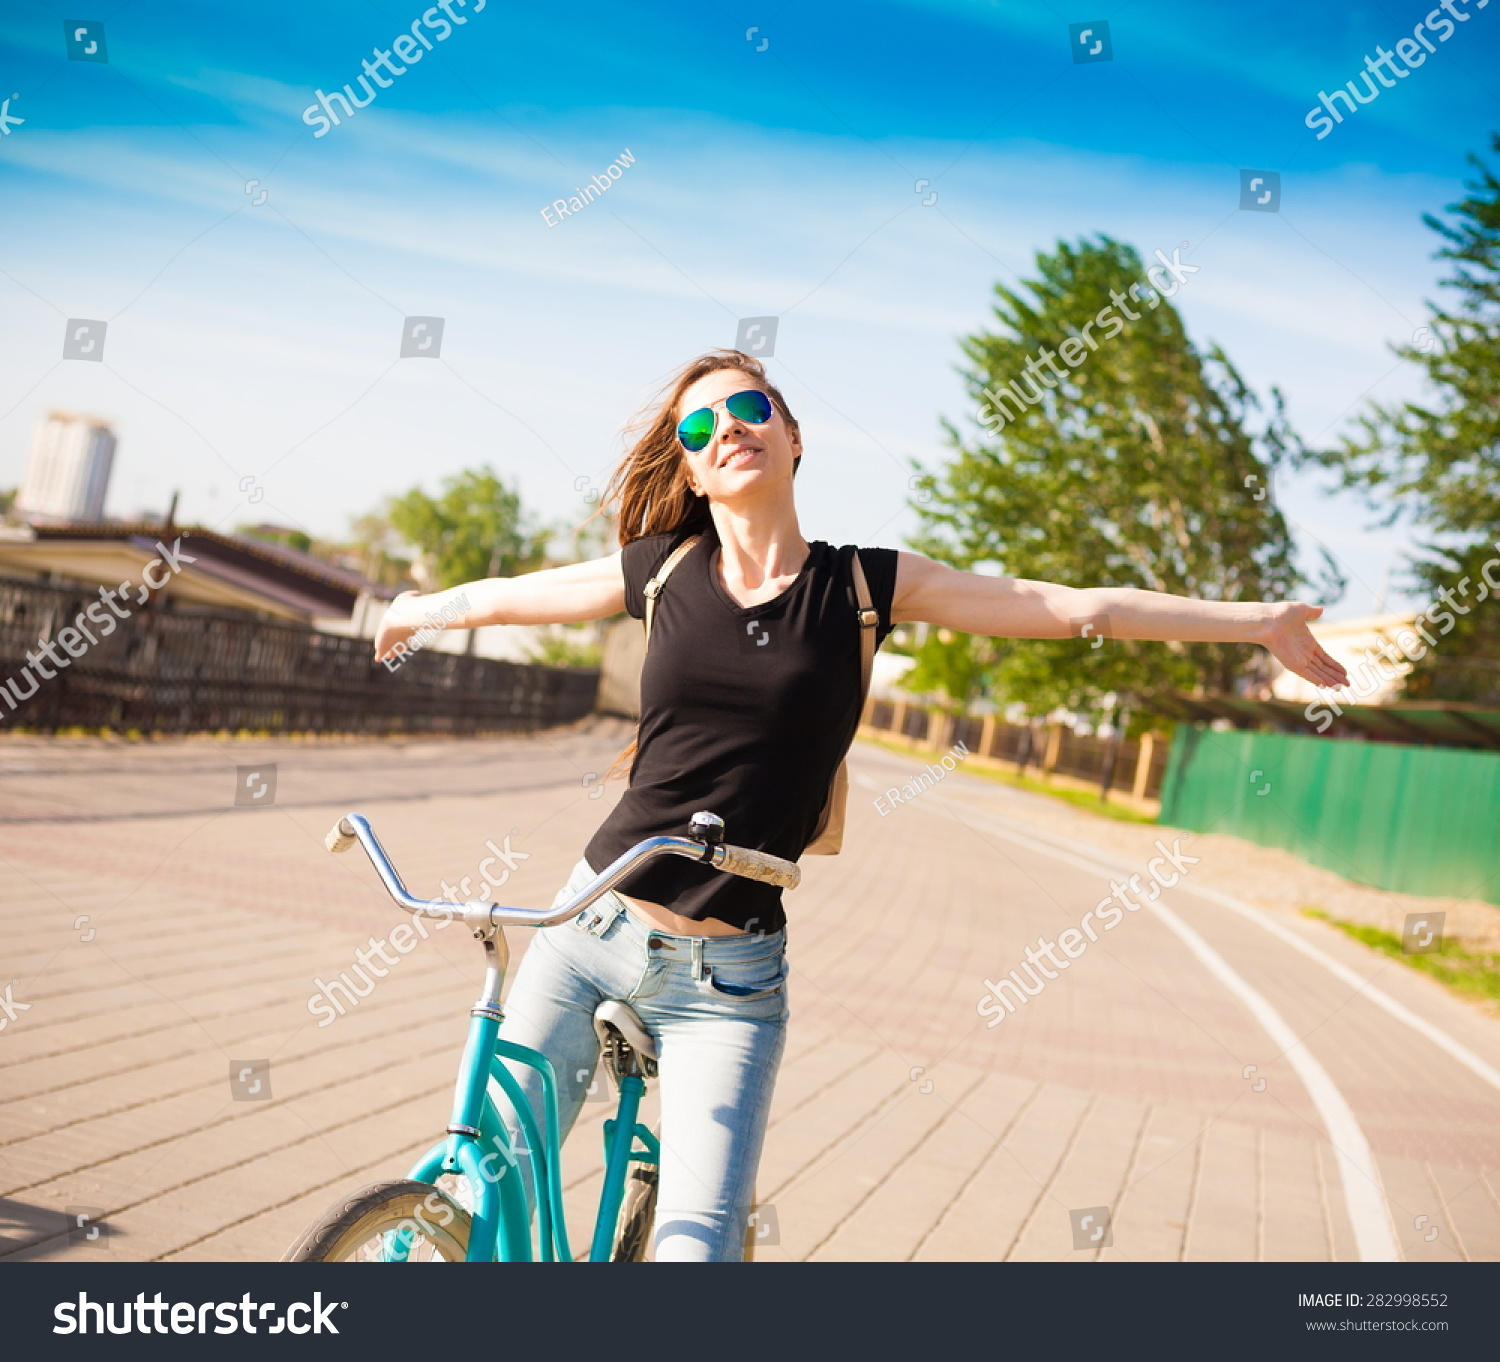 beautiful sensuality elegance haired hair woman happy fun cheerful smiling blue sunglasses black t-shirt jeans bicycle urban city portrait nature slim sport body hobby equipment riding bike cyclist  #282998552